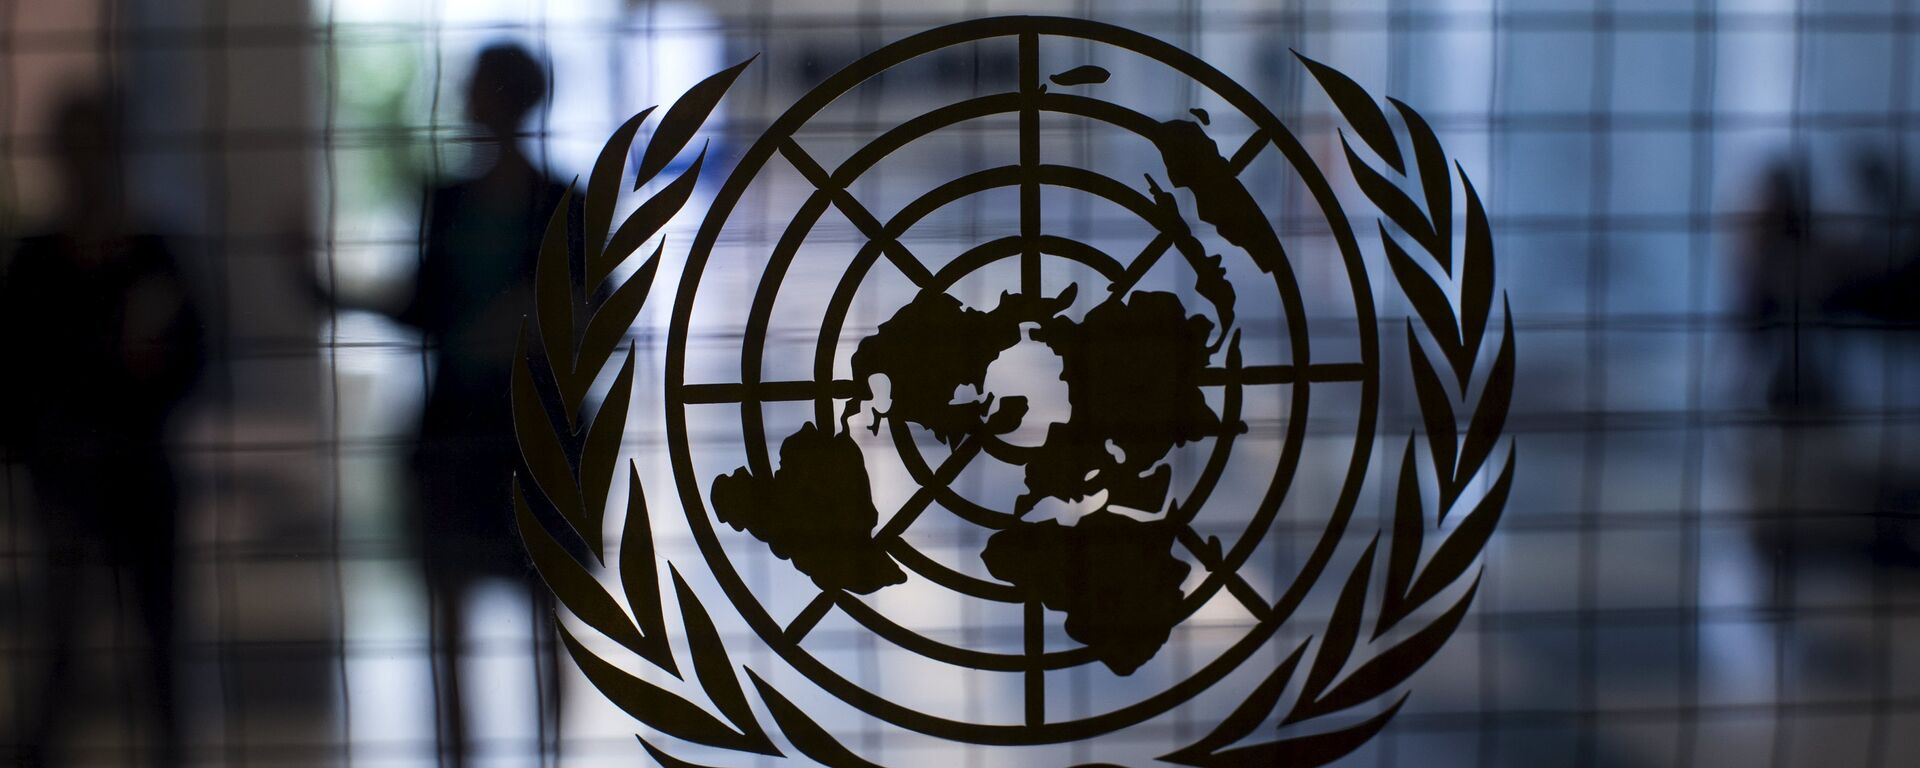 Logo de la ONU - Sputnik Mundo, 1920, 05.11.2021